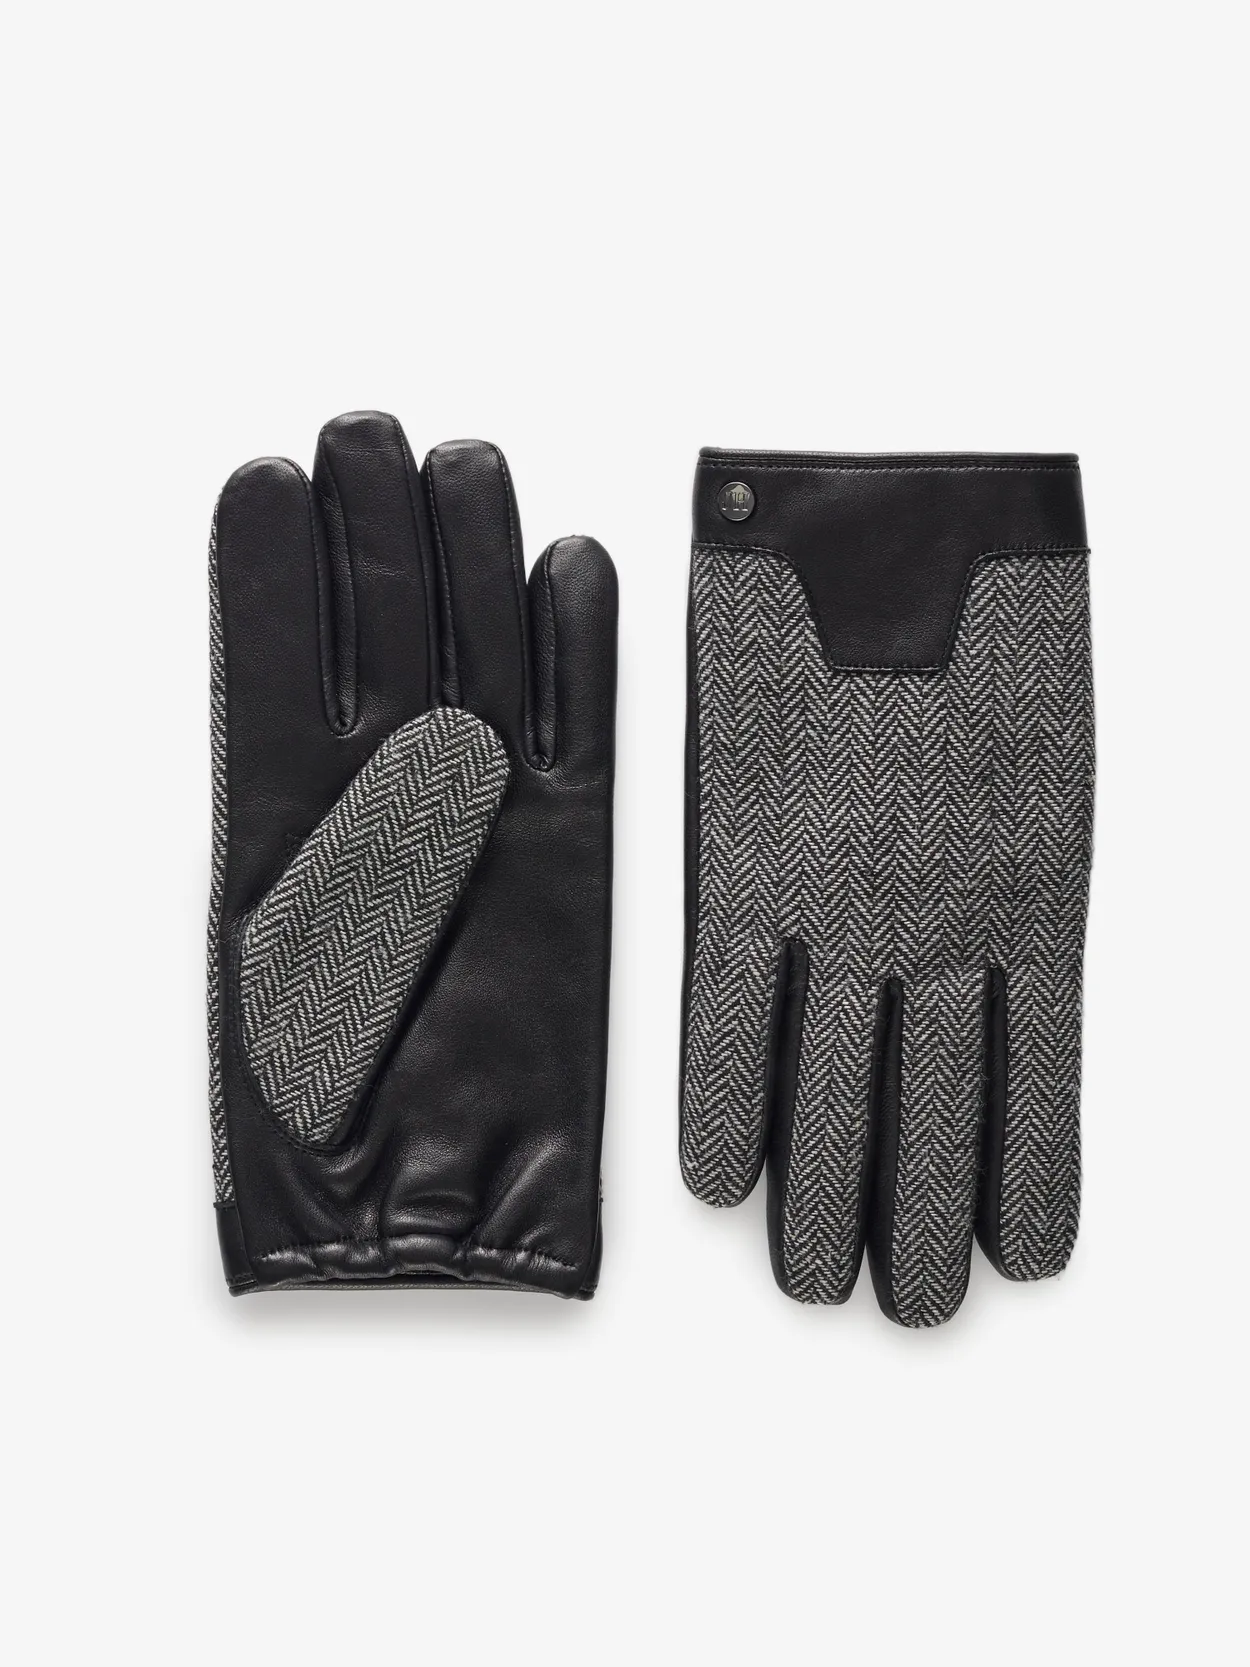 Black Leather Gloves Chamonix